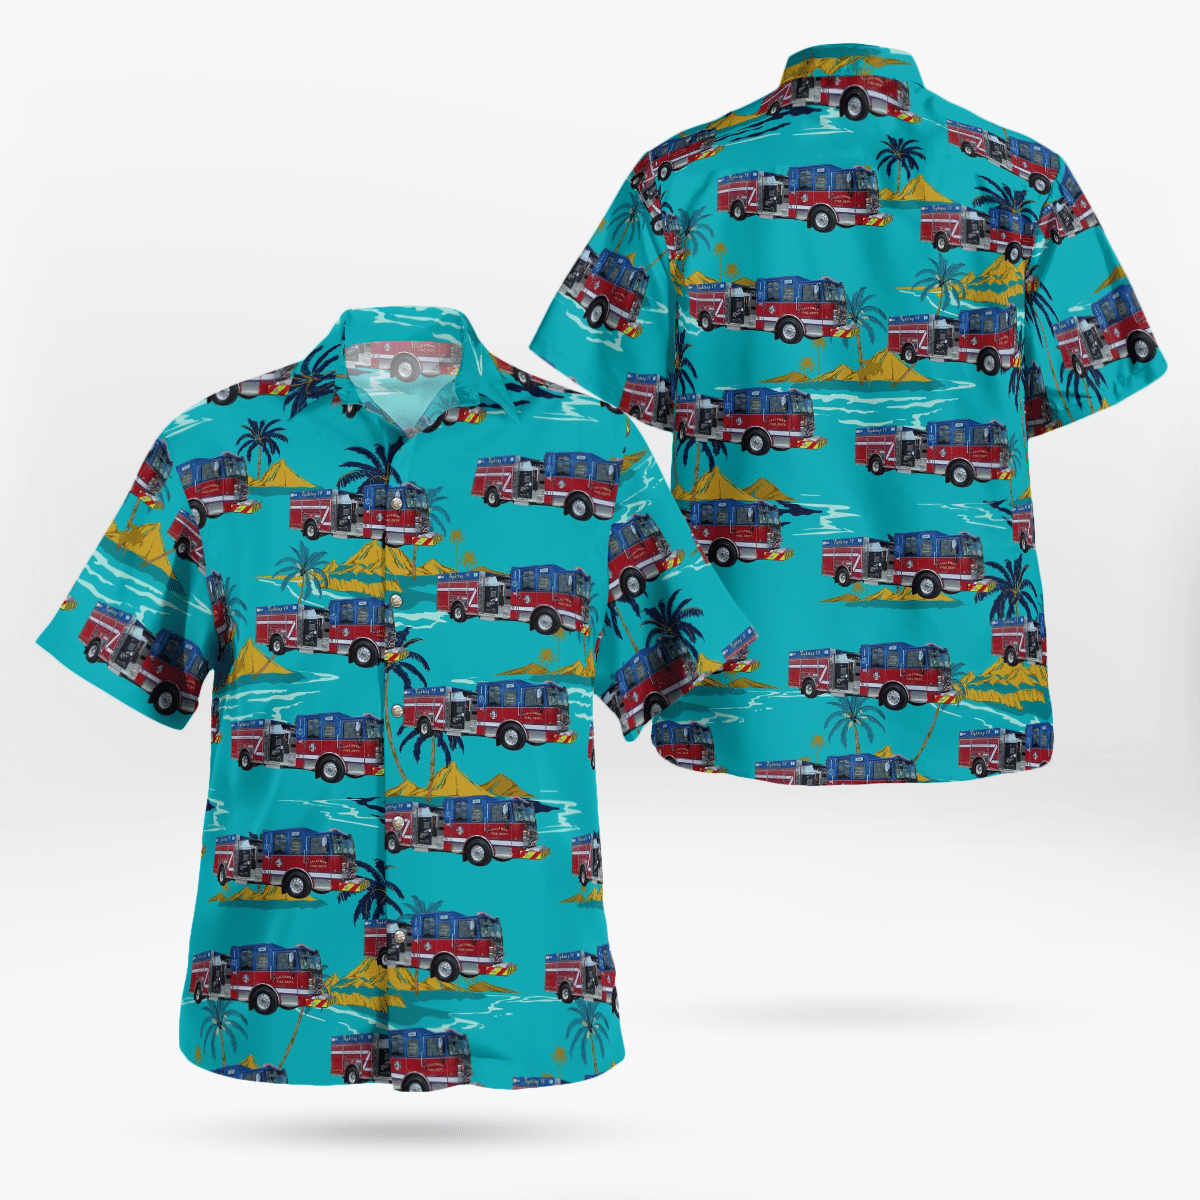 Why don't you order Hot Hawaiian Shirt today? 381